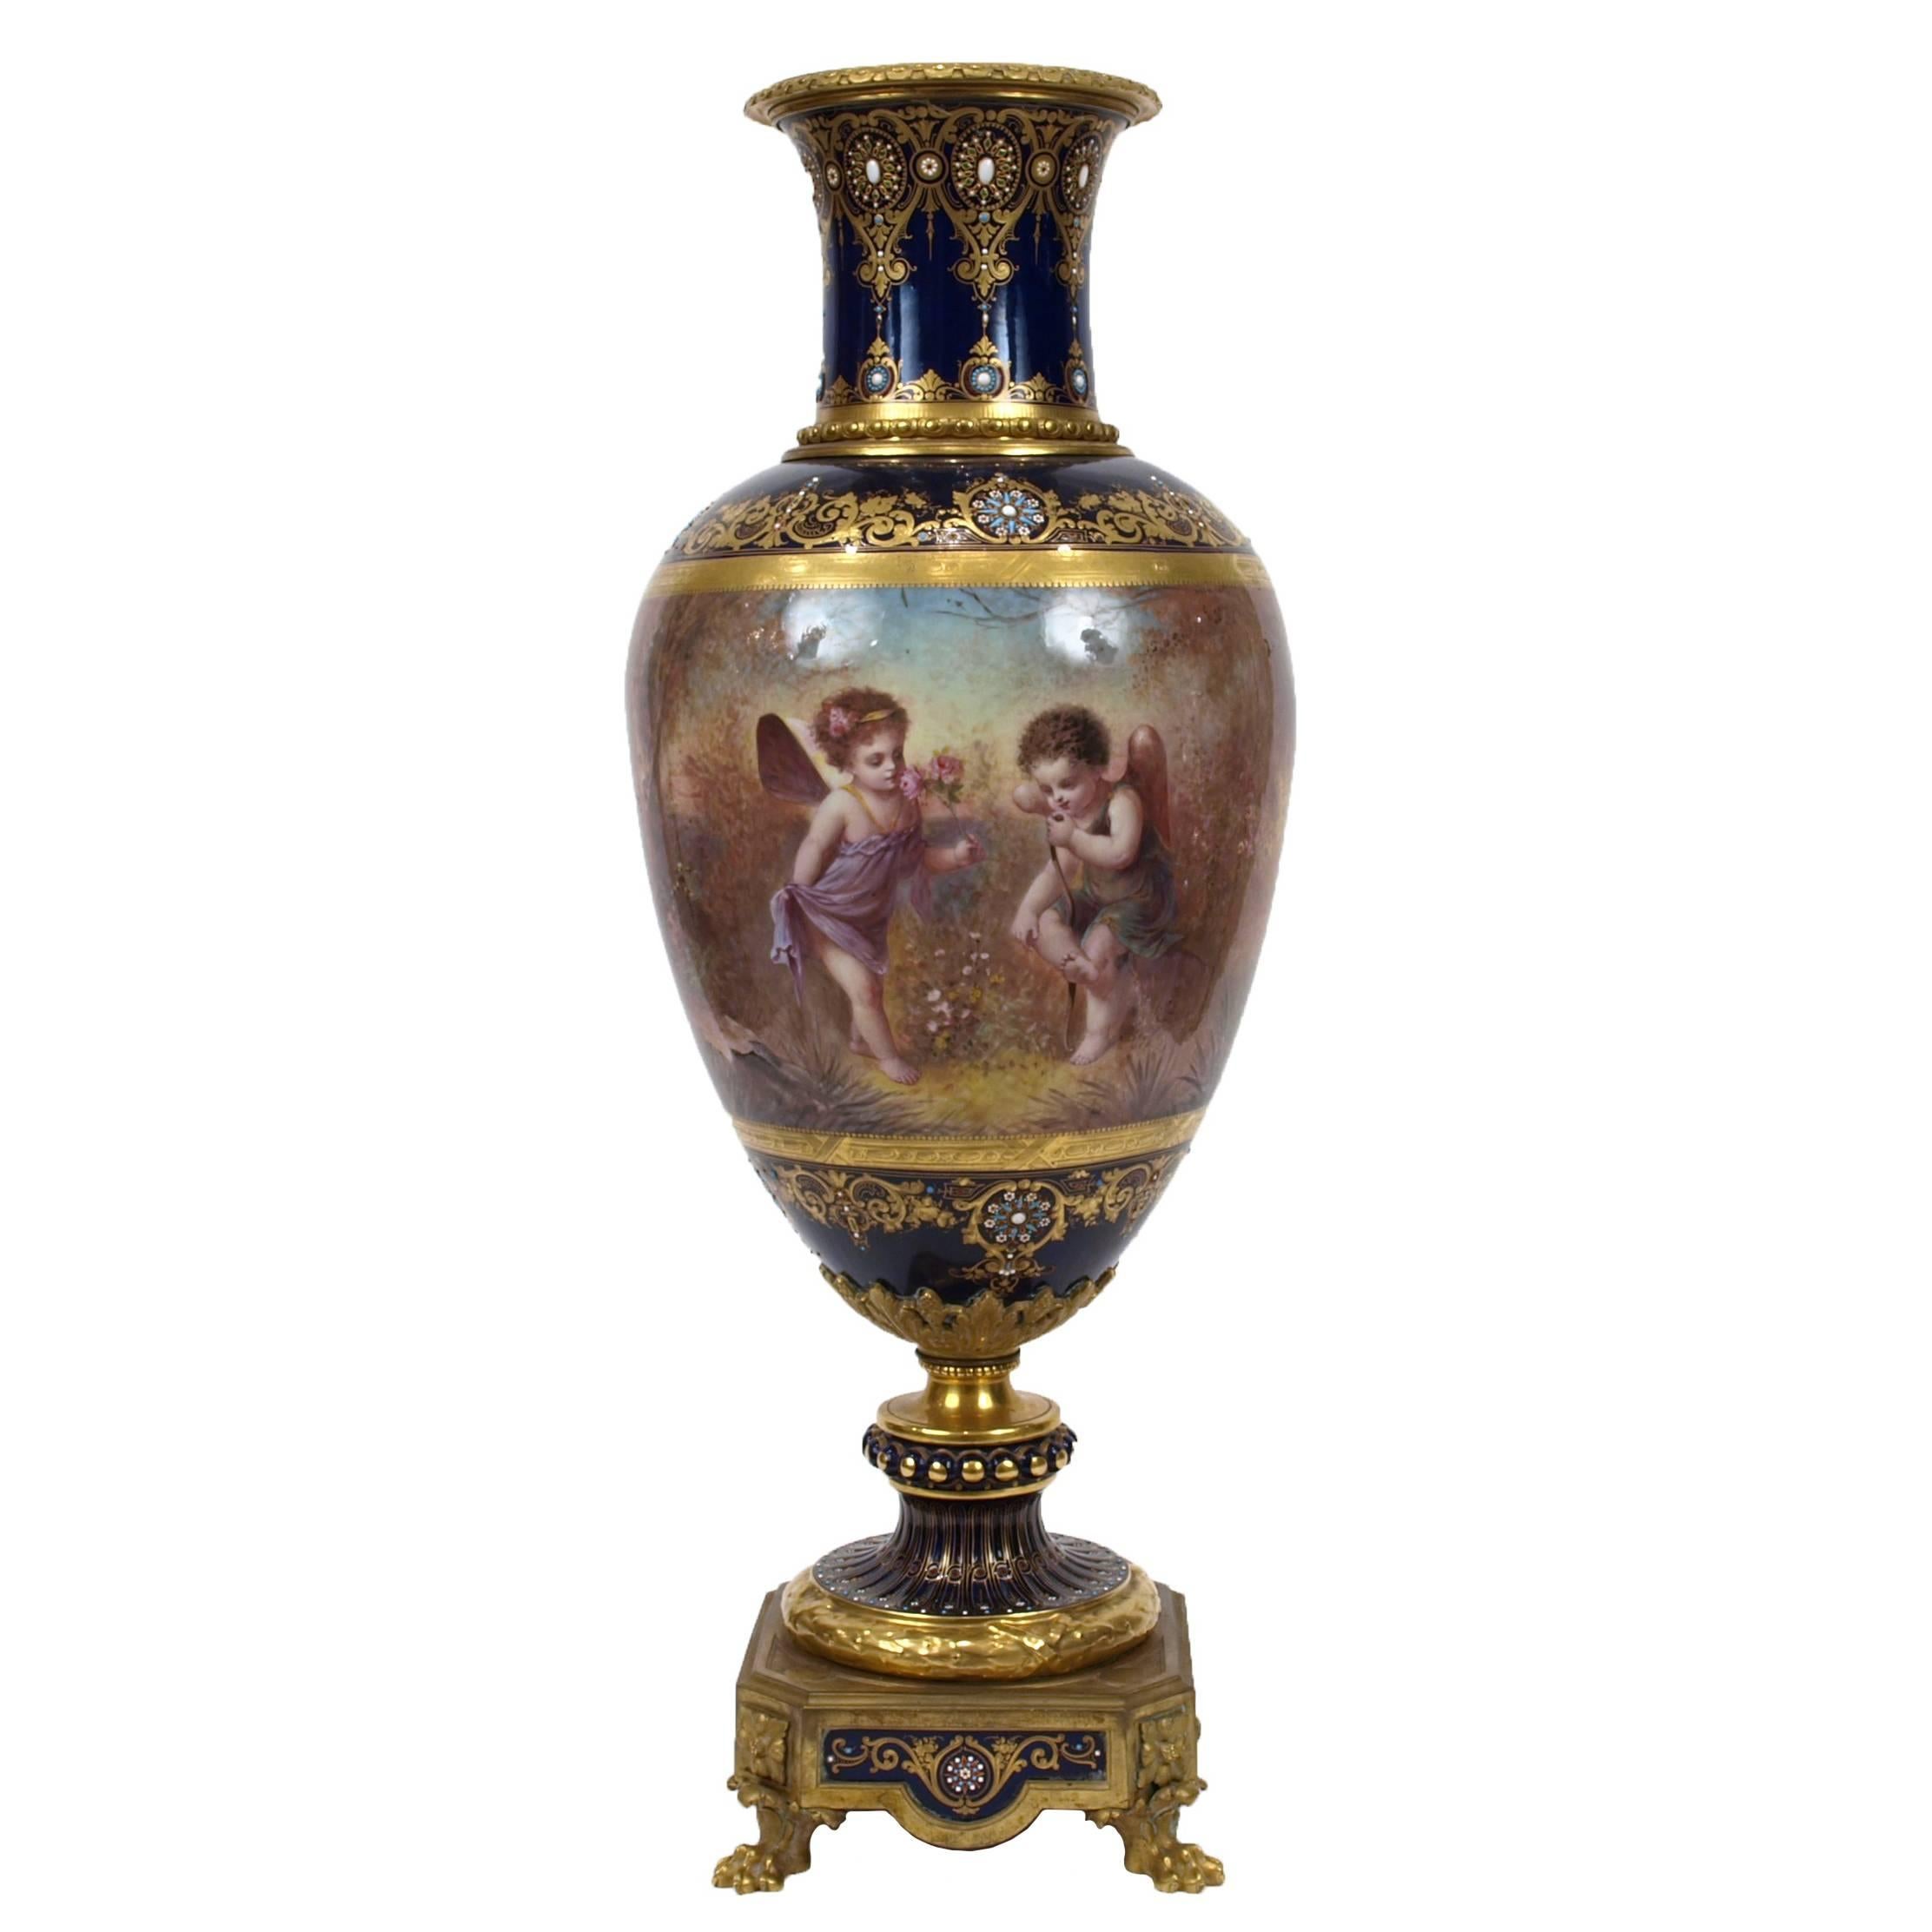 Very Fine Ormolu-Mounted Sèvres Style Porcelain Vase